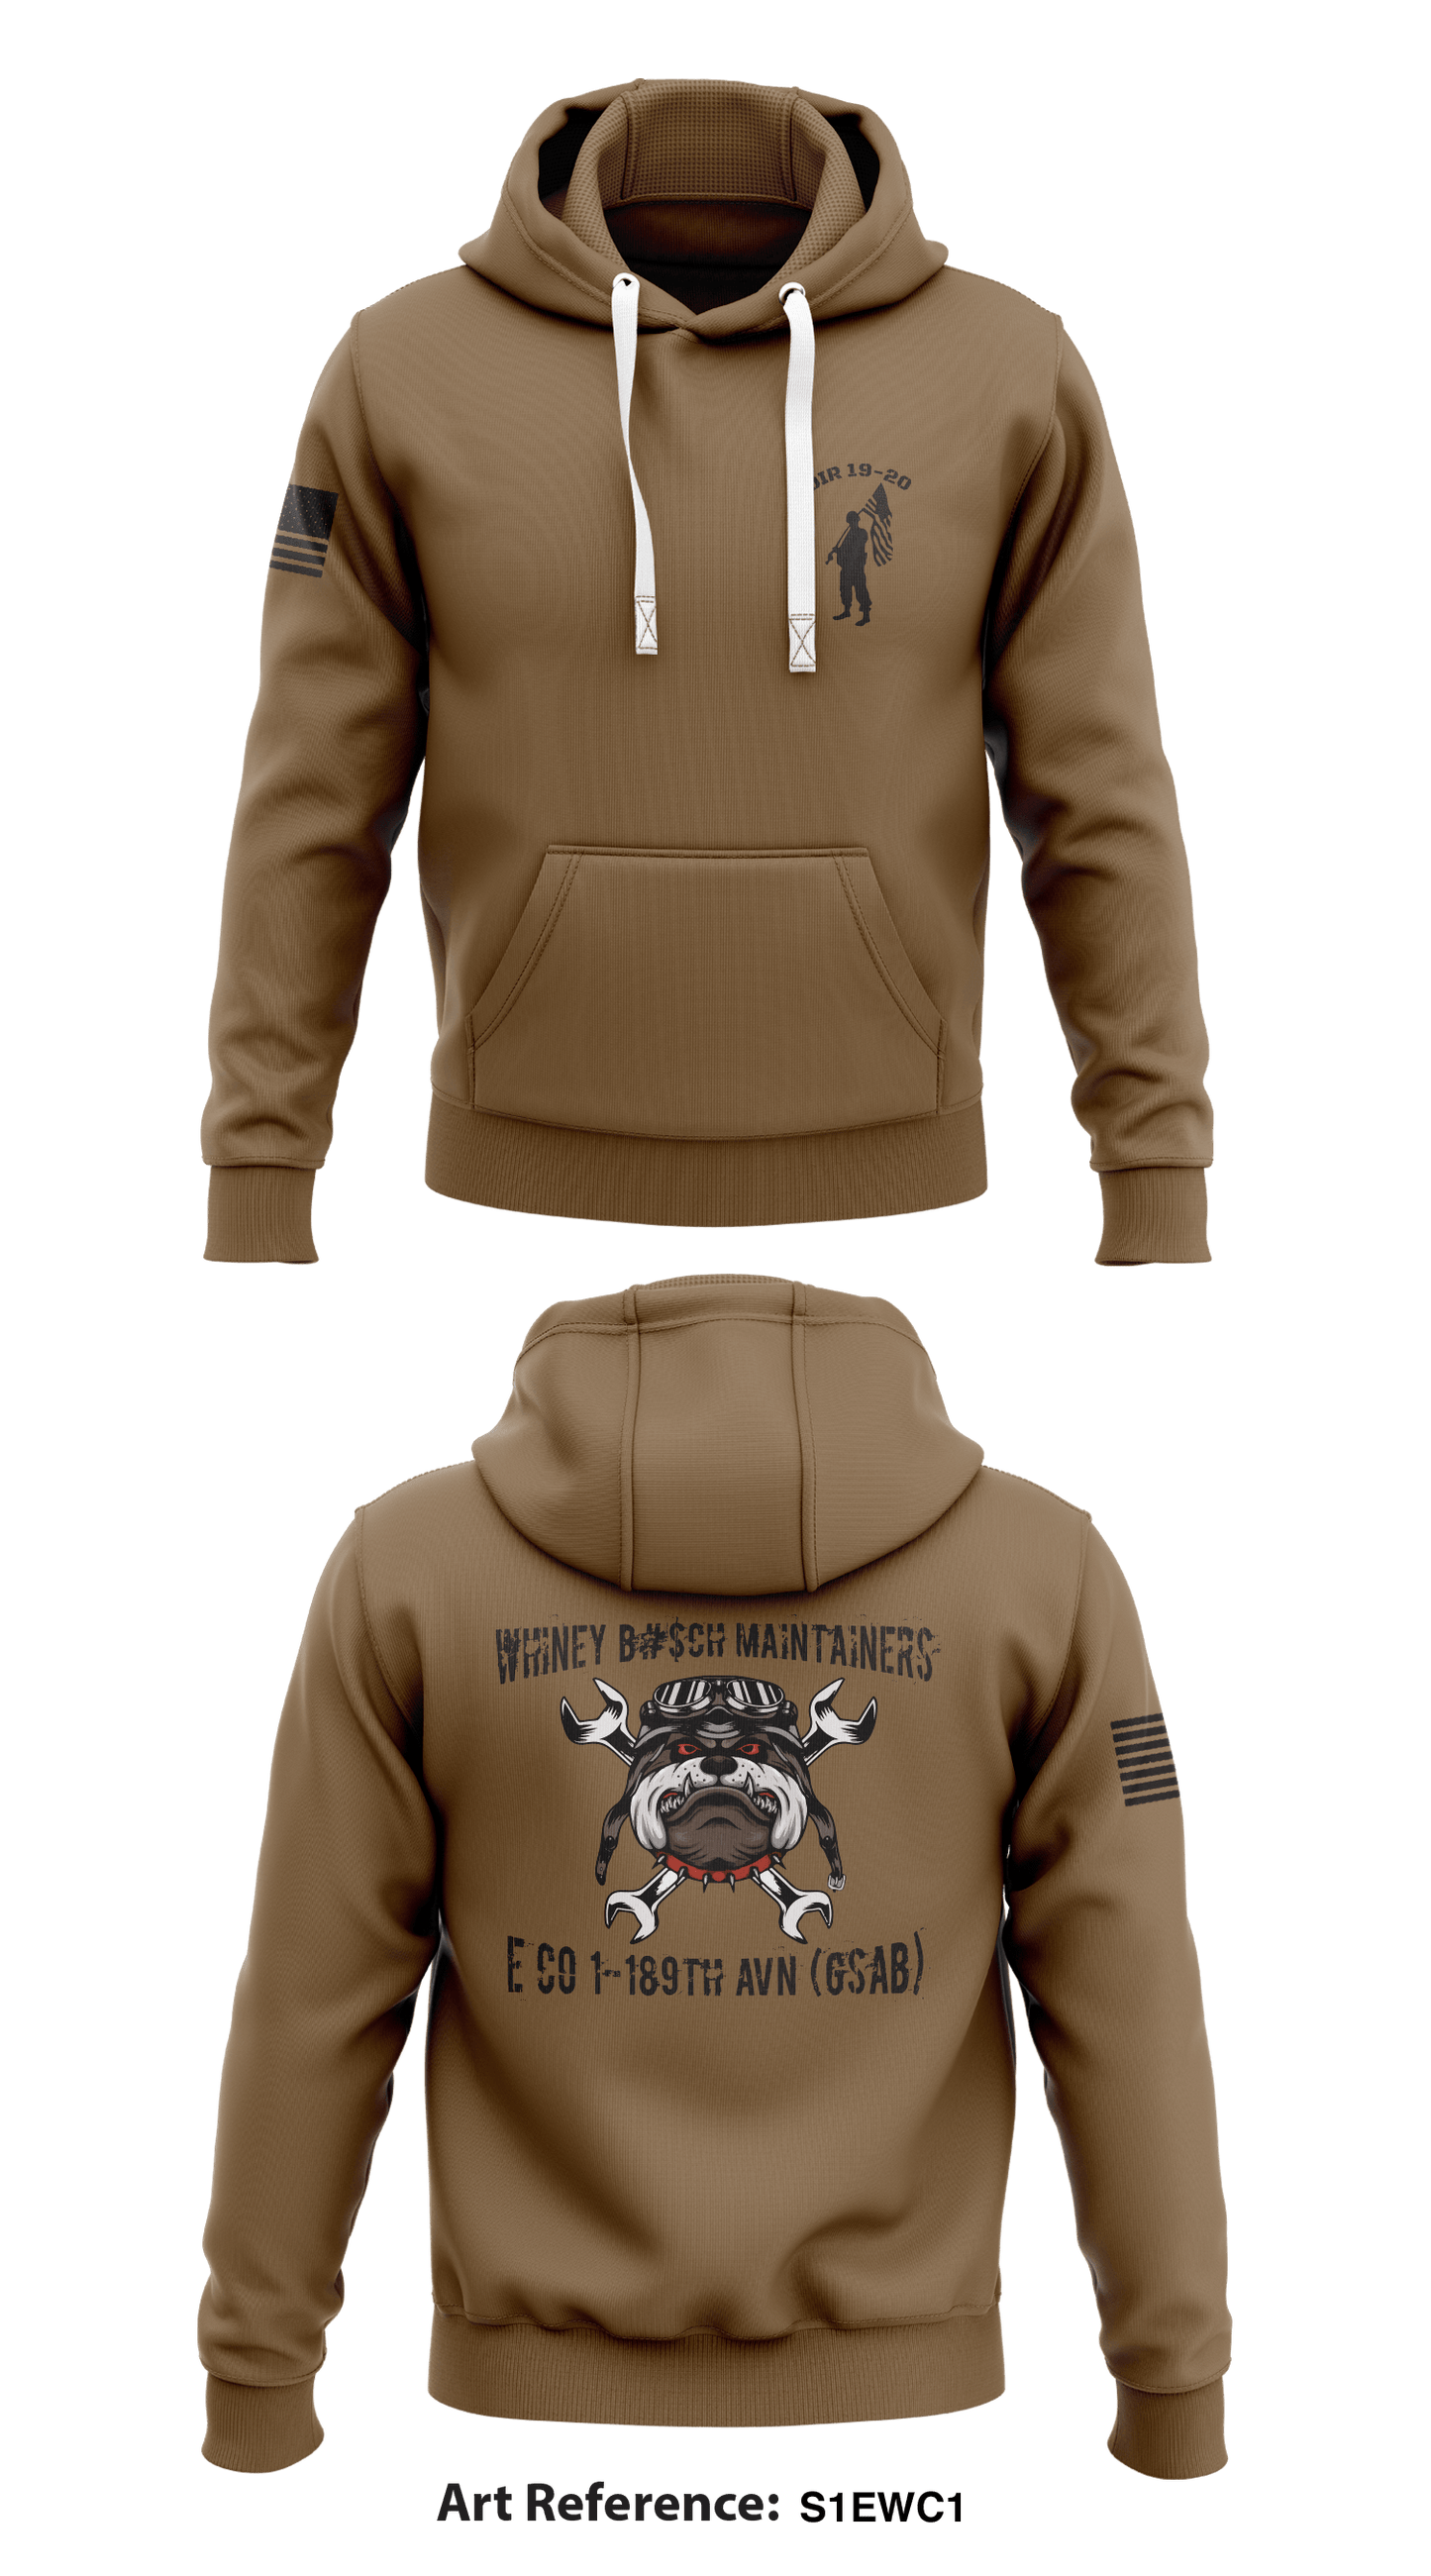 E Co 1-189th ANN (GSAB) Store 1  Core Men's Hooded Performance Sweatshirt - S1ewc1